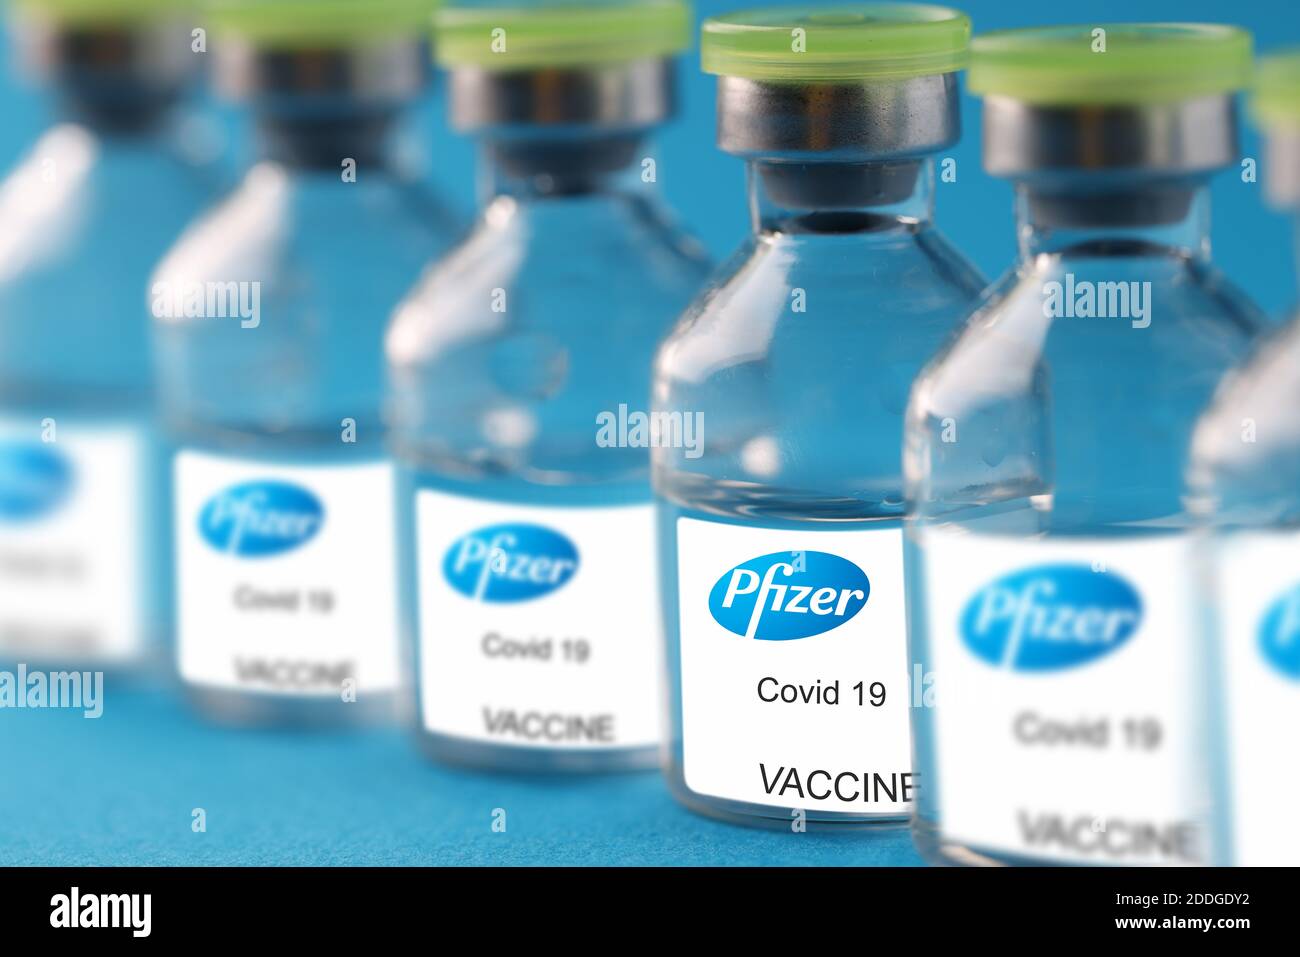 Flacon en verre avec le vaccin coronavirus Covid 19 de pfizer Closeup Banque D'Images